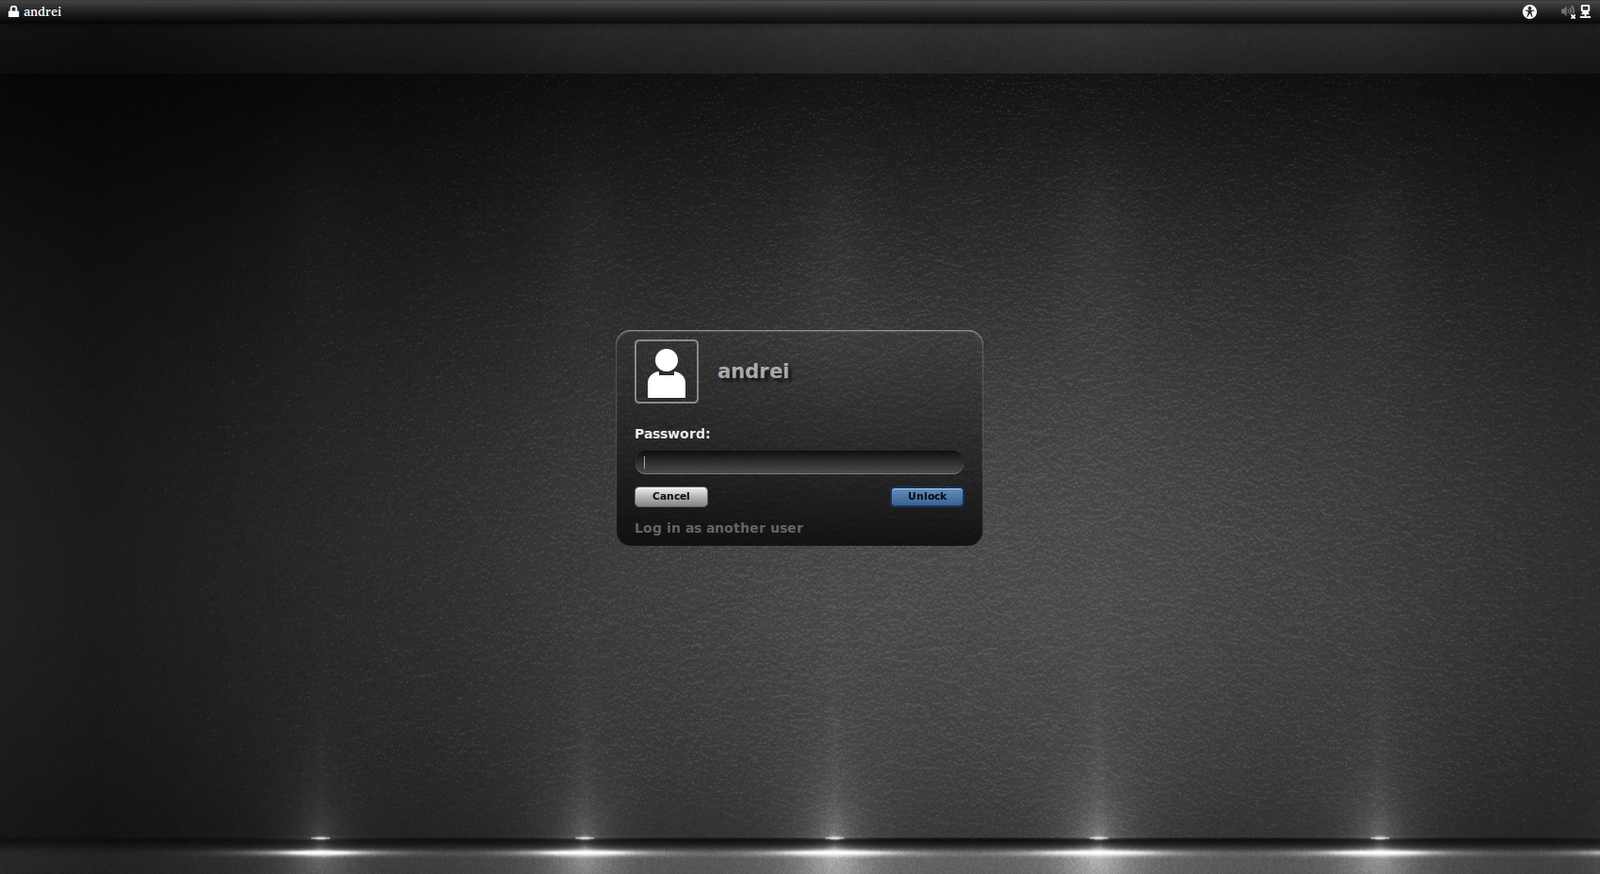  Lock Screen Change Theme Wallpaper Web Upd8 Ubuntu Linux blog